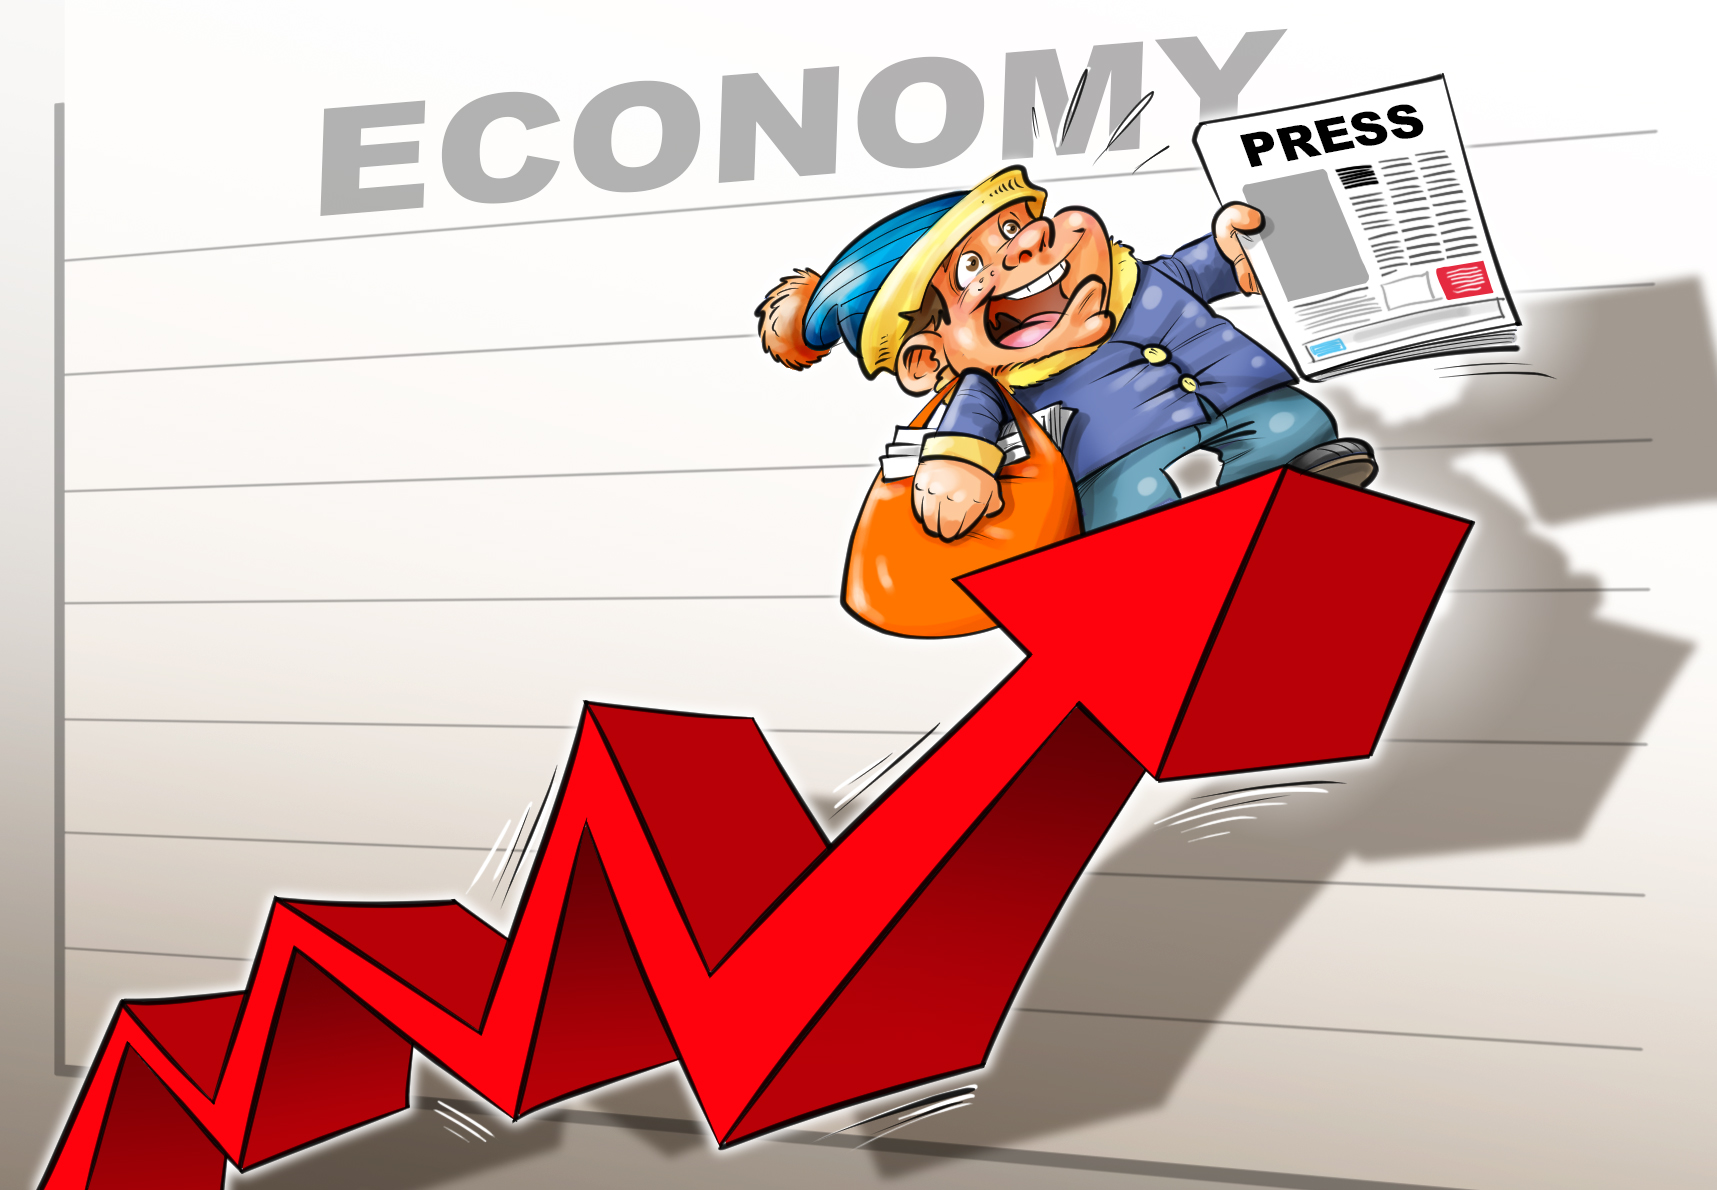 Economic Freedom Promotes Freedom of the Press MEI